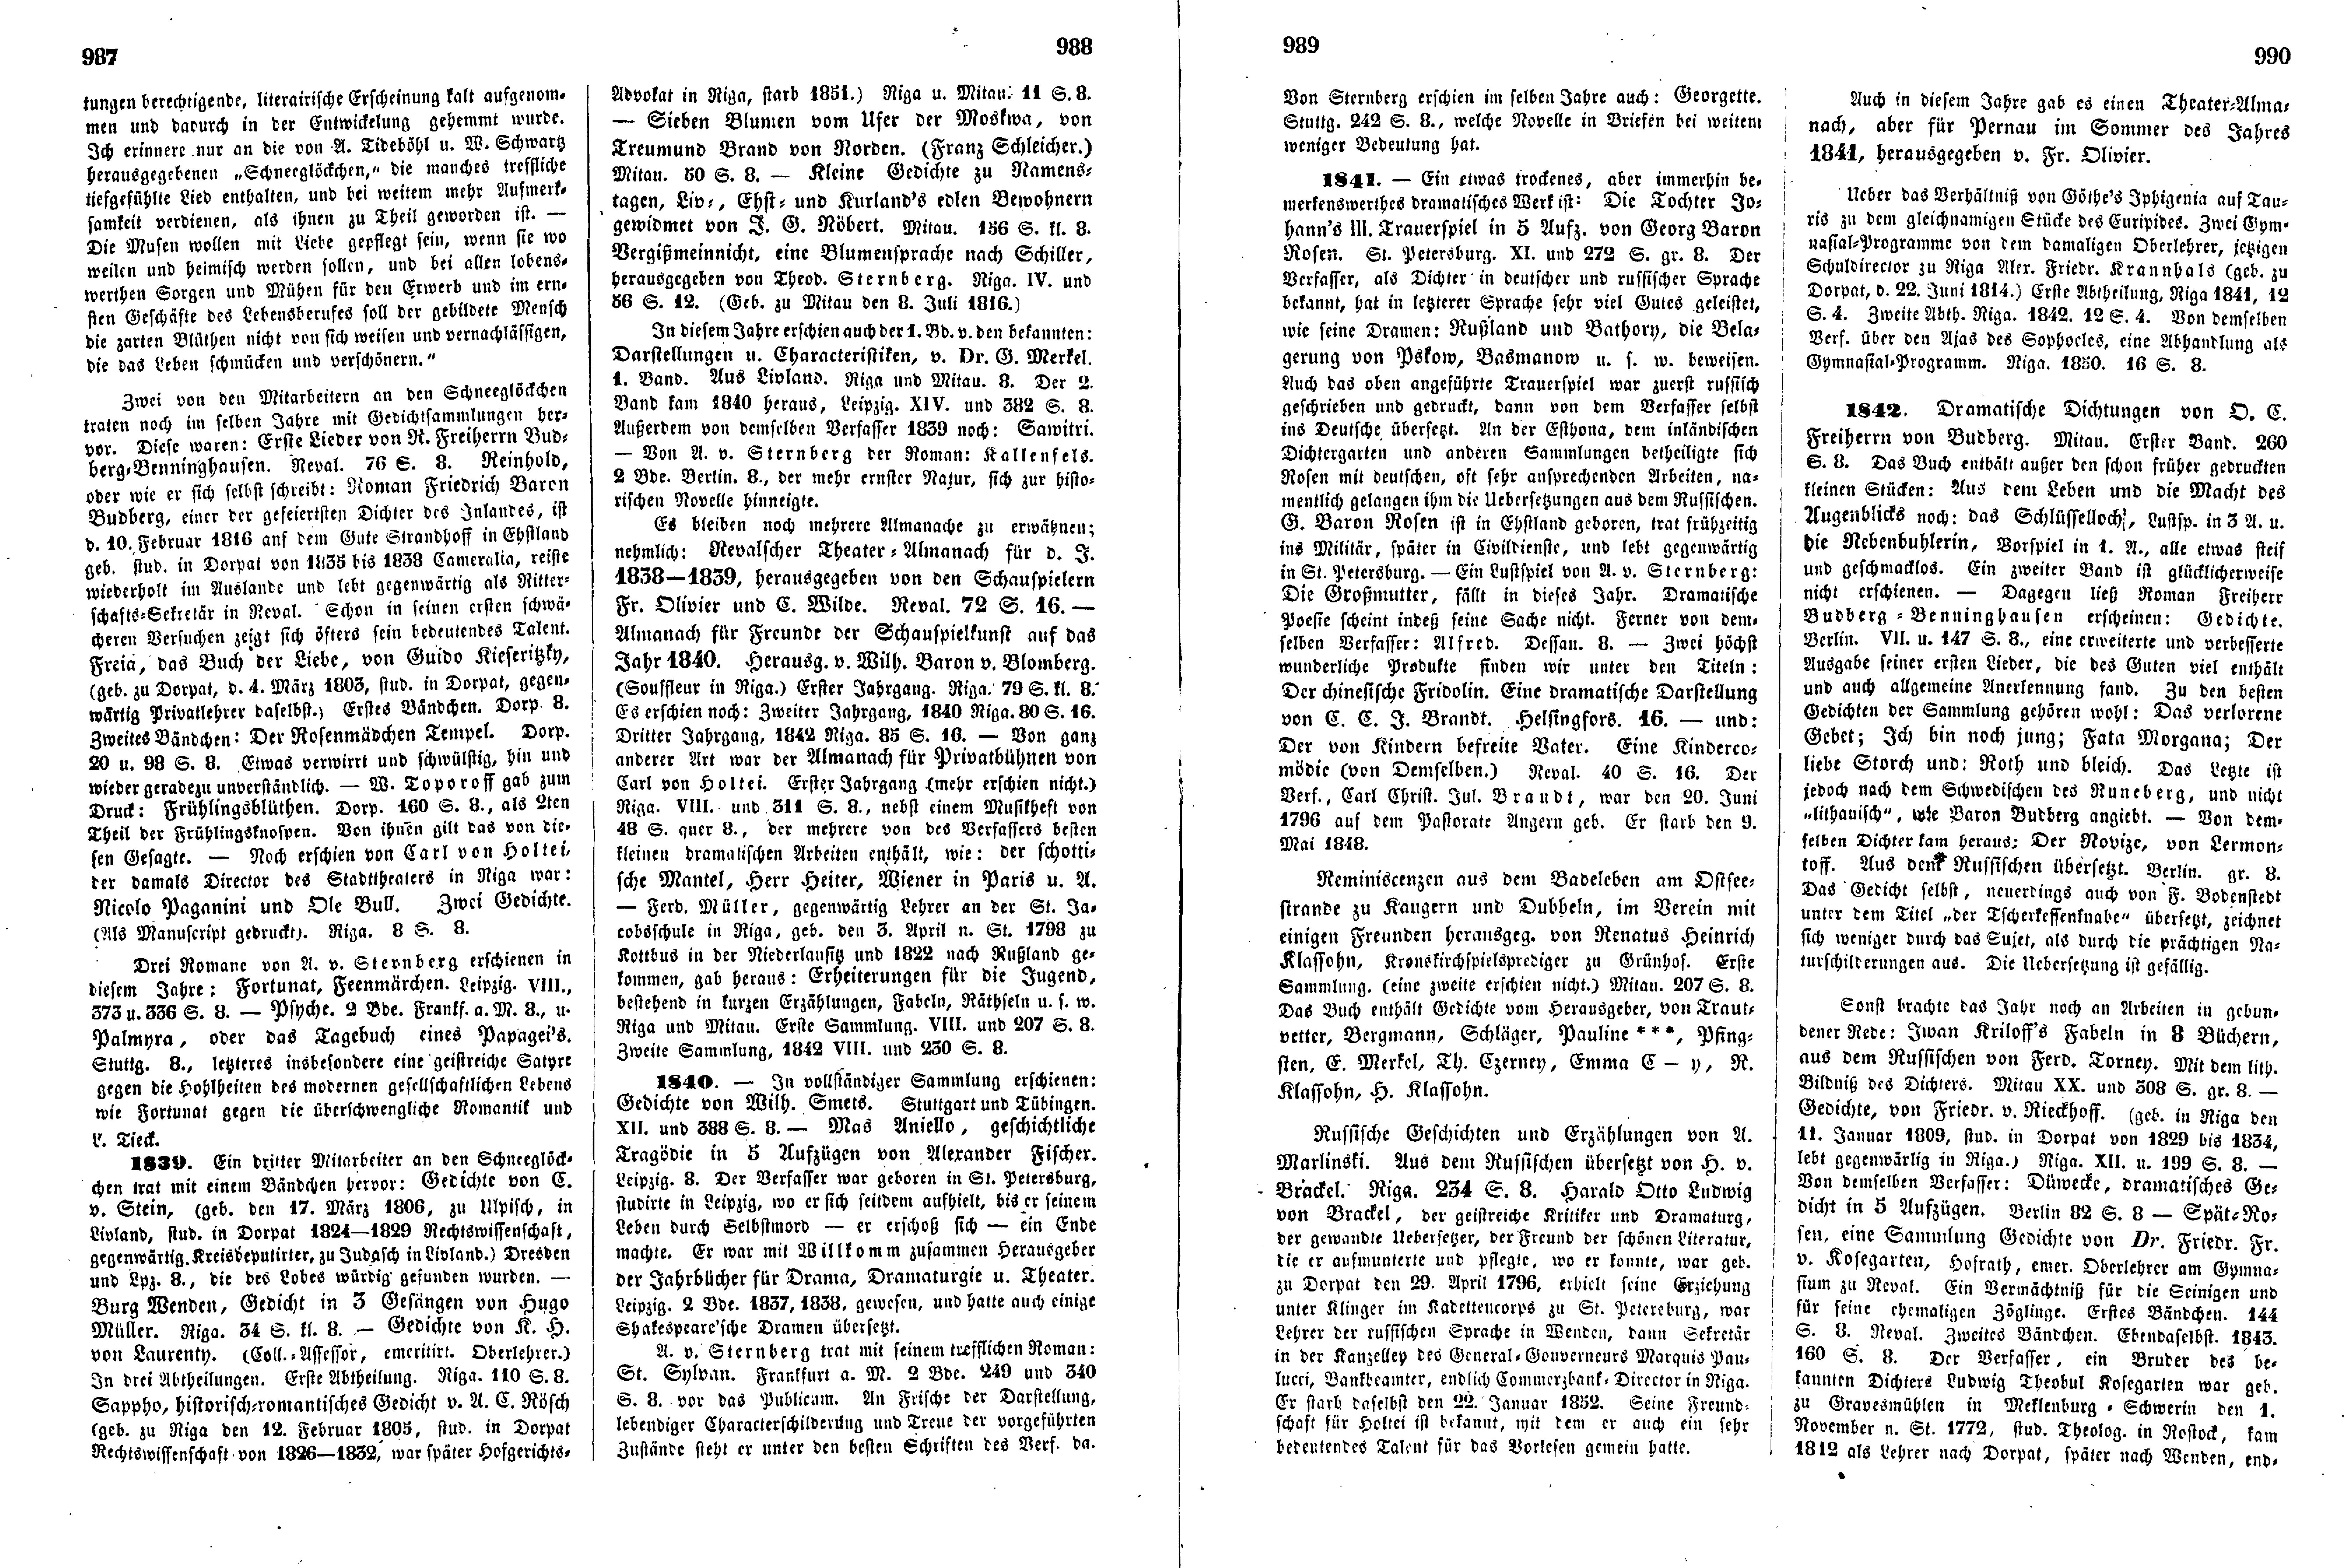 Das Inland [18] (1853) | 257. (987-990) Main body of text